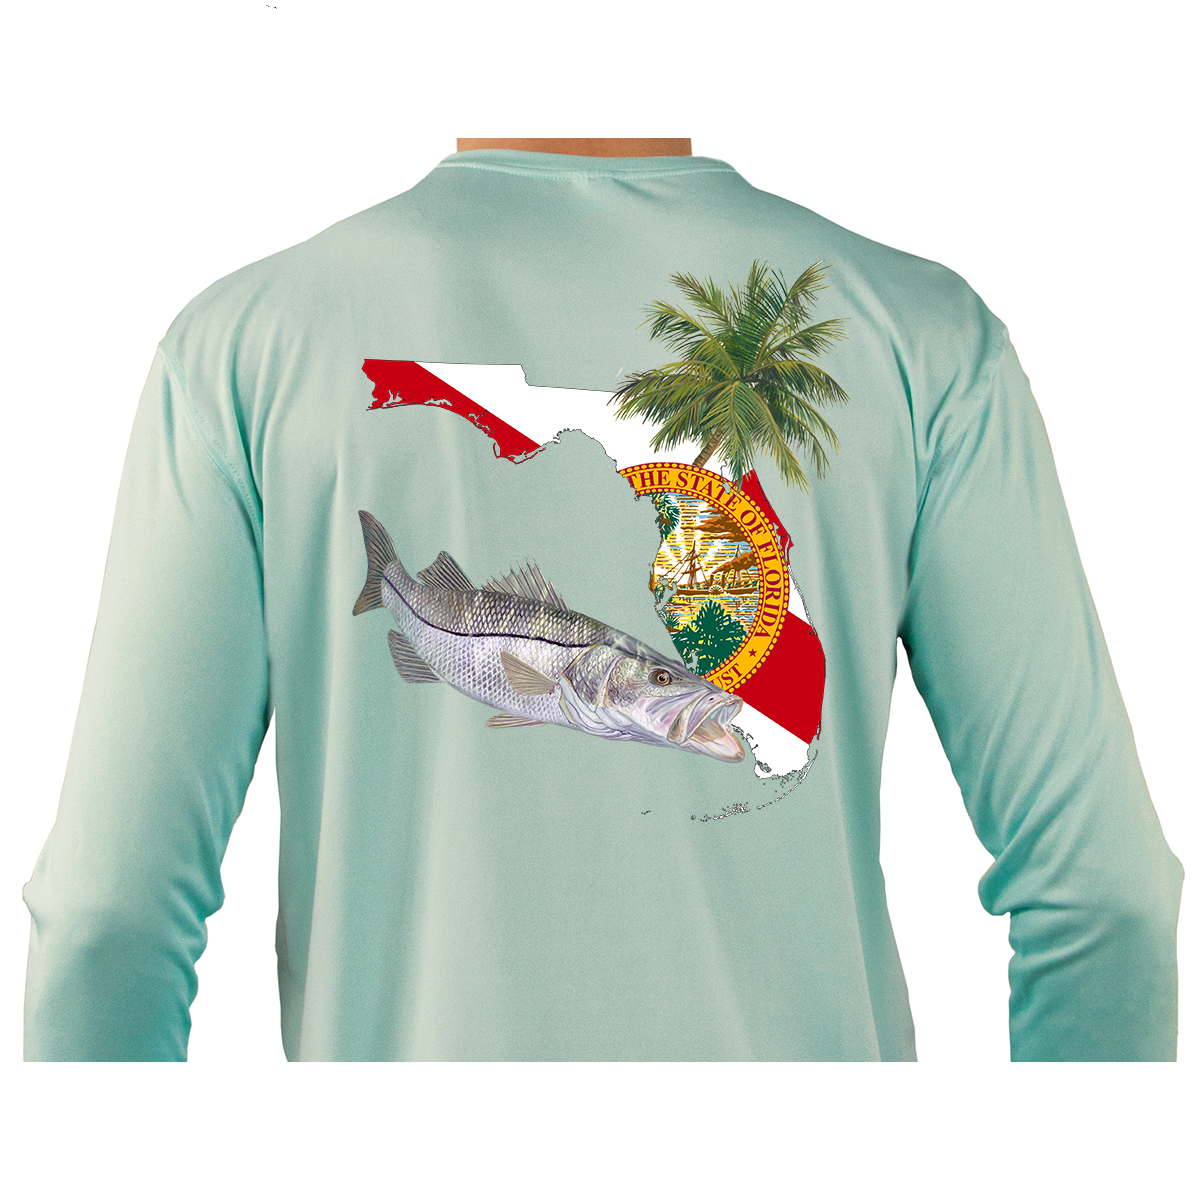 Kids Fishing Shirts Snook Florida State Flag Custom Sleeve - Skiff Life